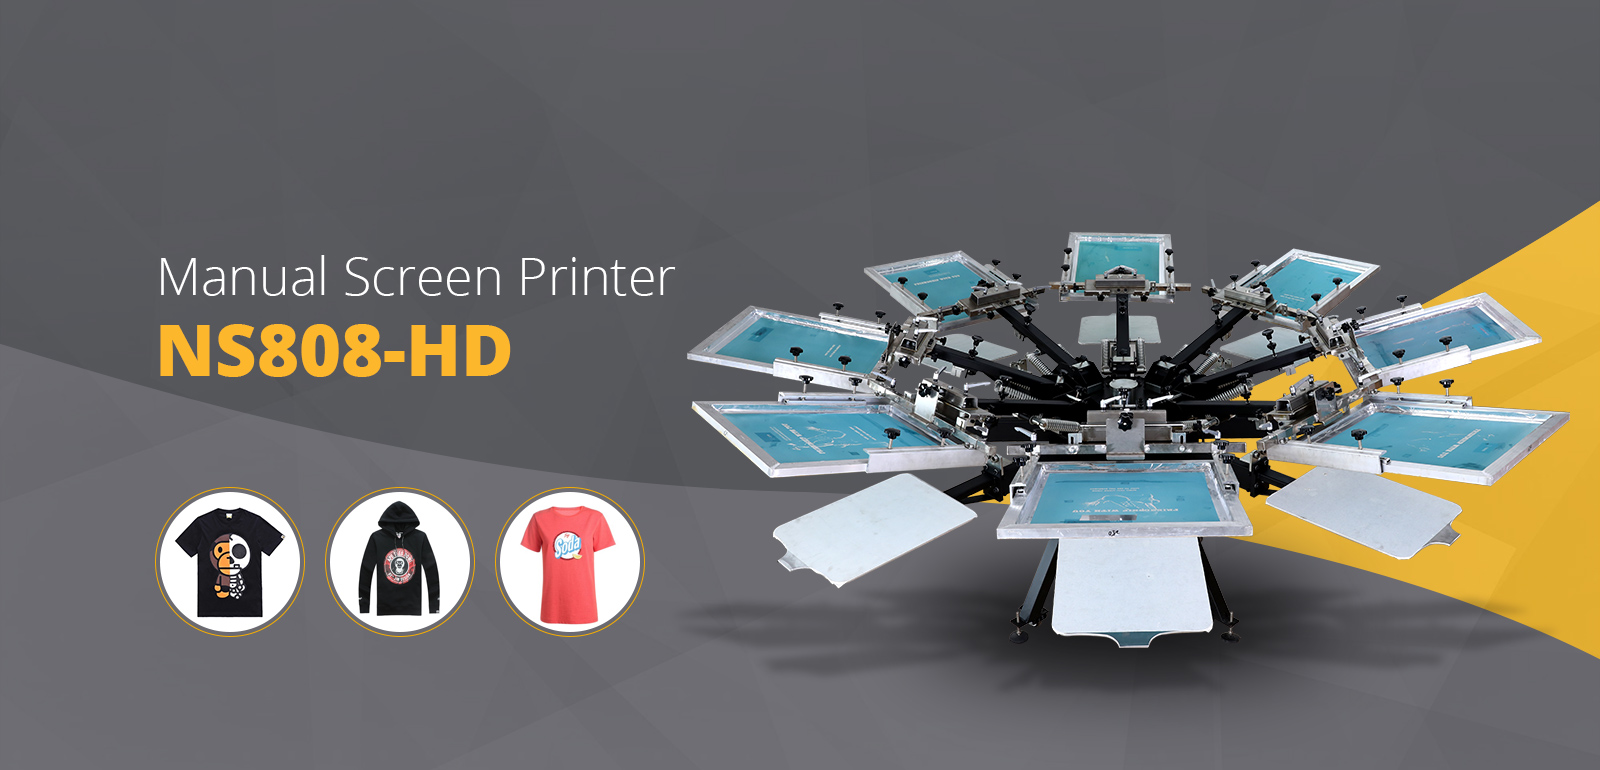 Manual Screen Printer - NS808-HD